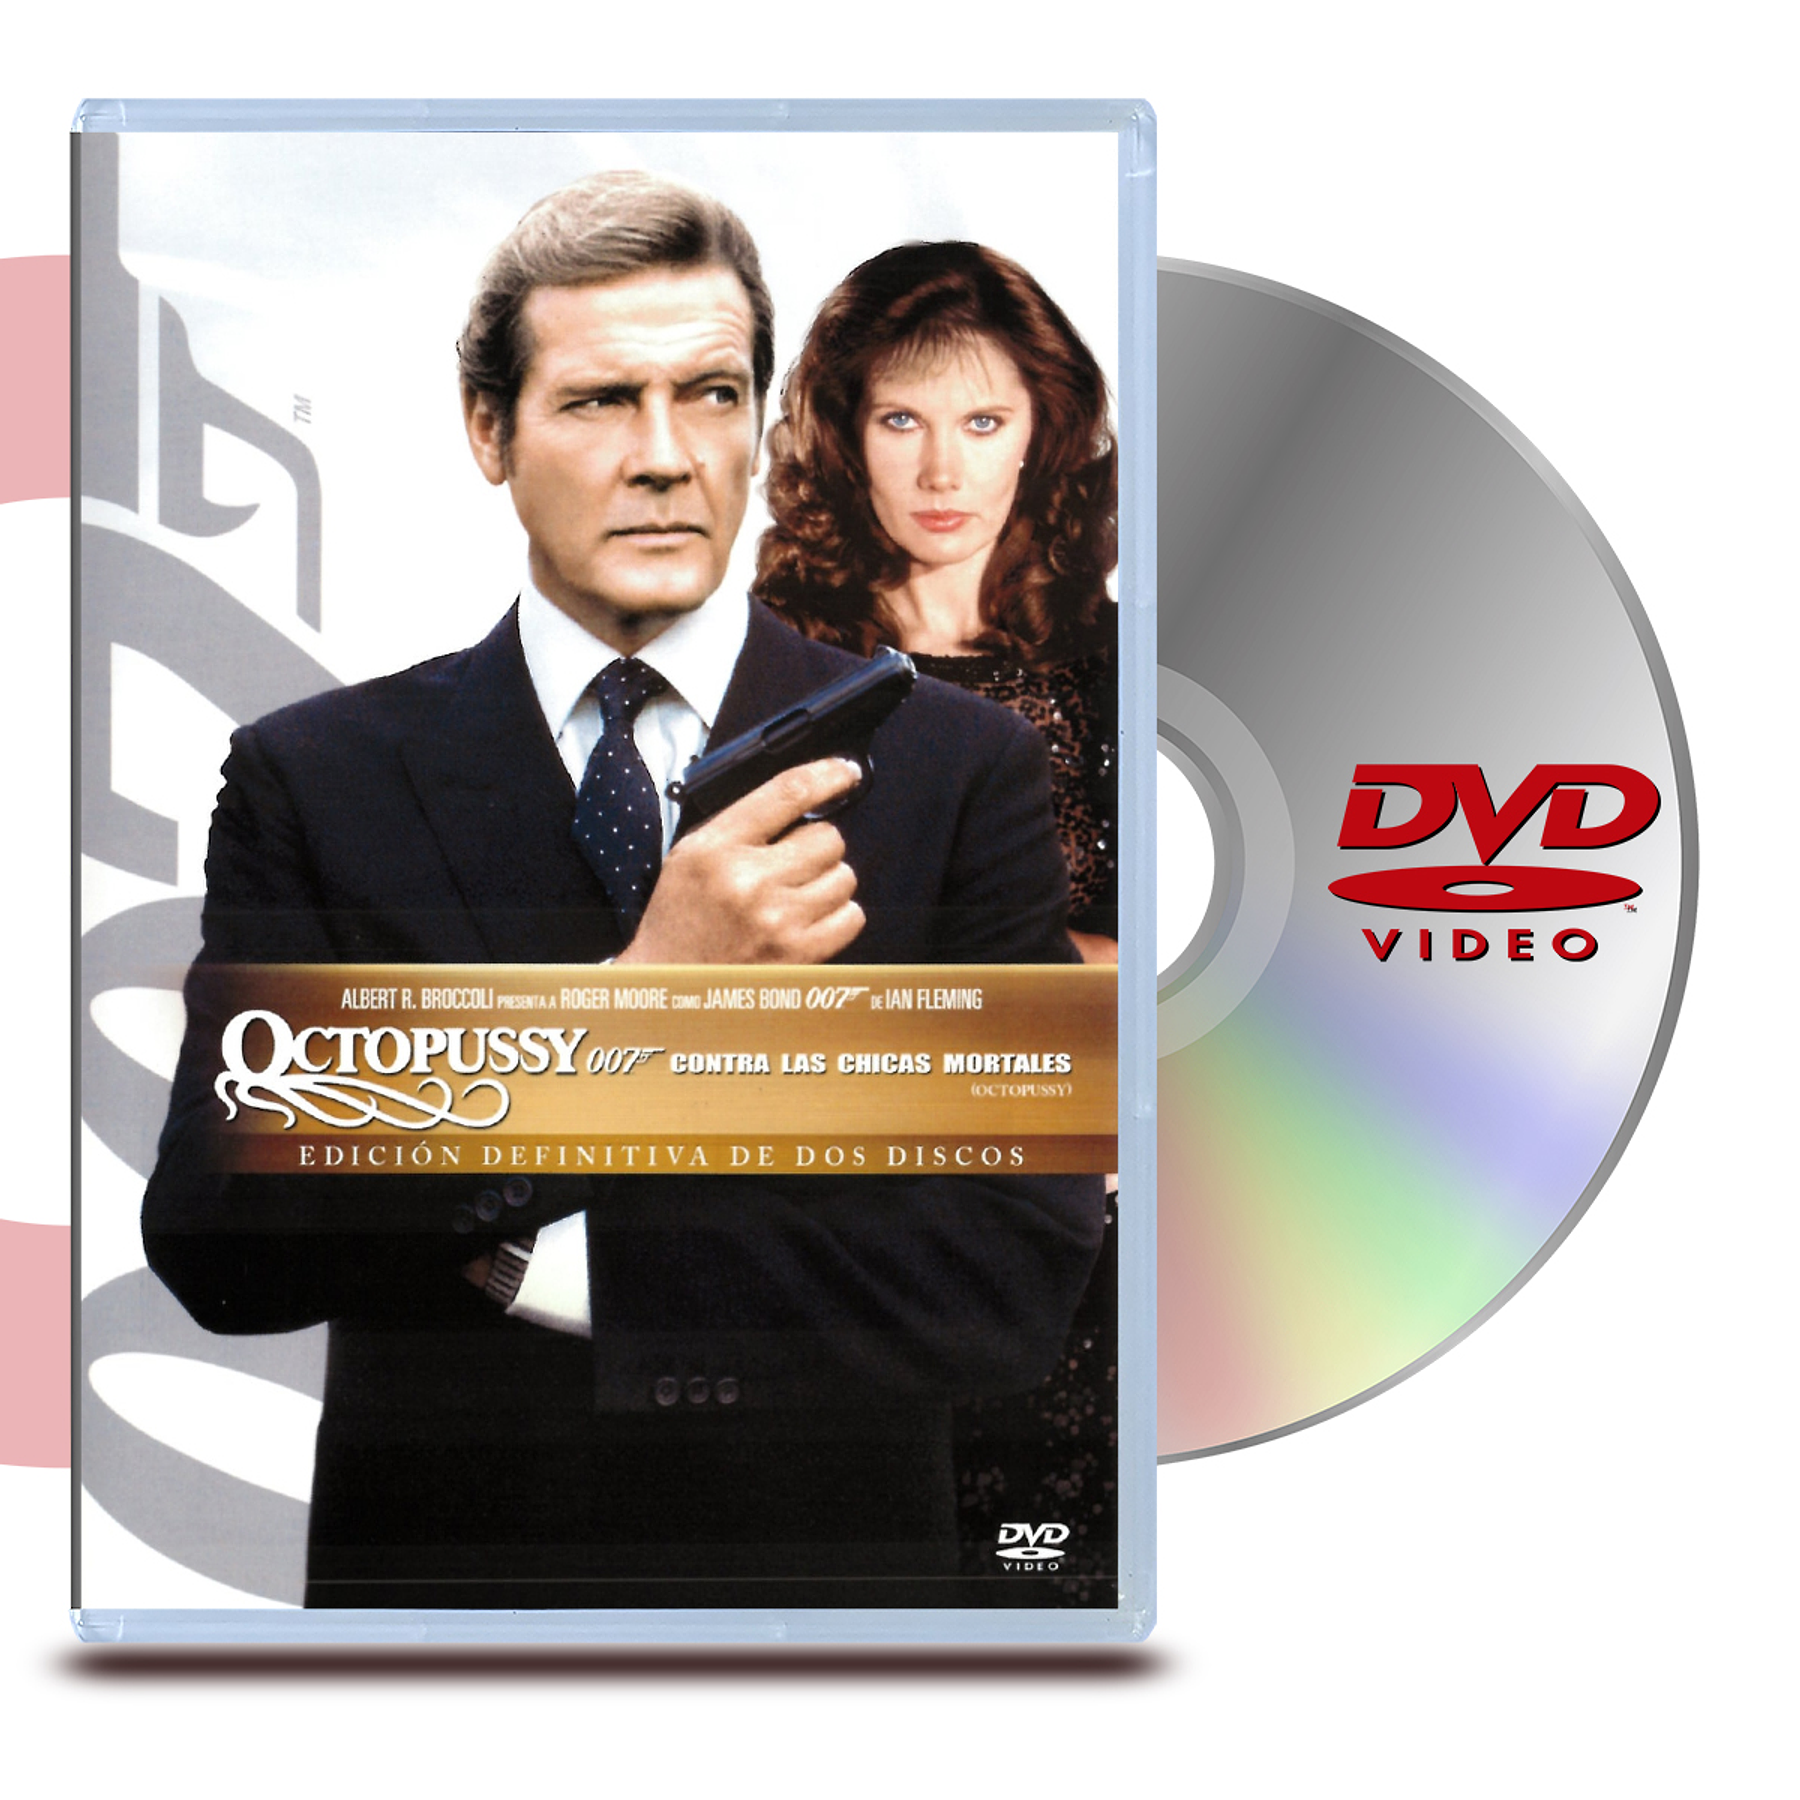 DVD 007 OCTOPUSSY CONTRA LAS CHICAS (2 discos)